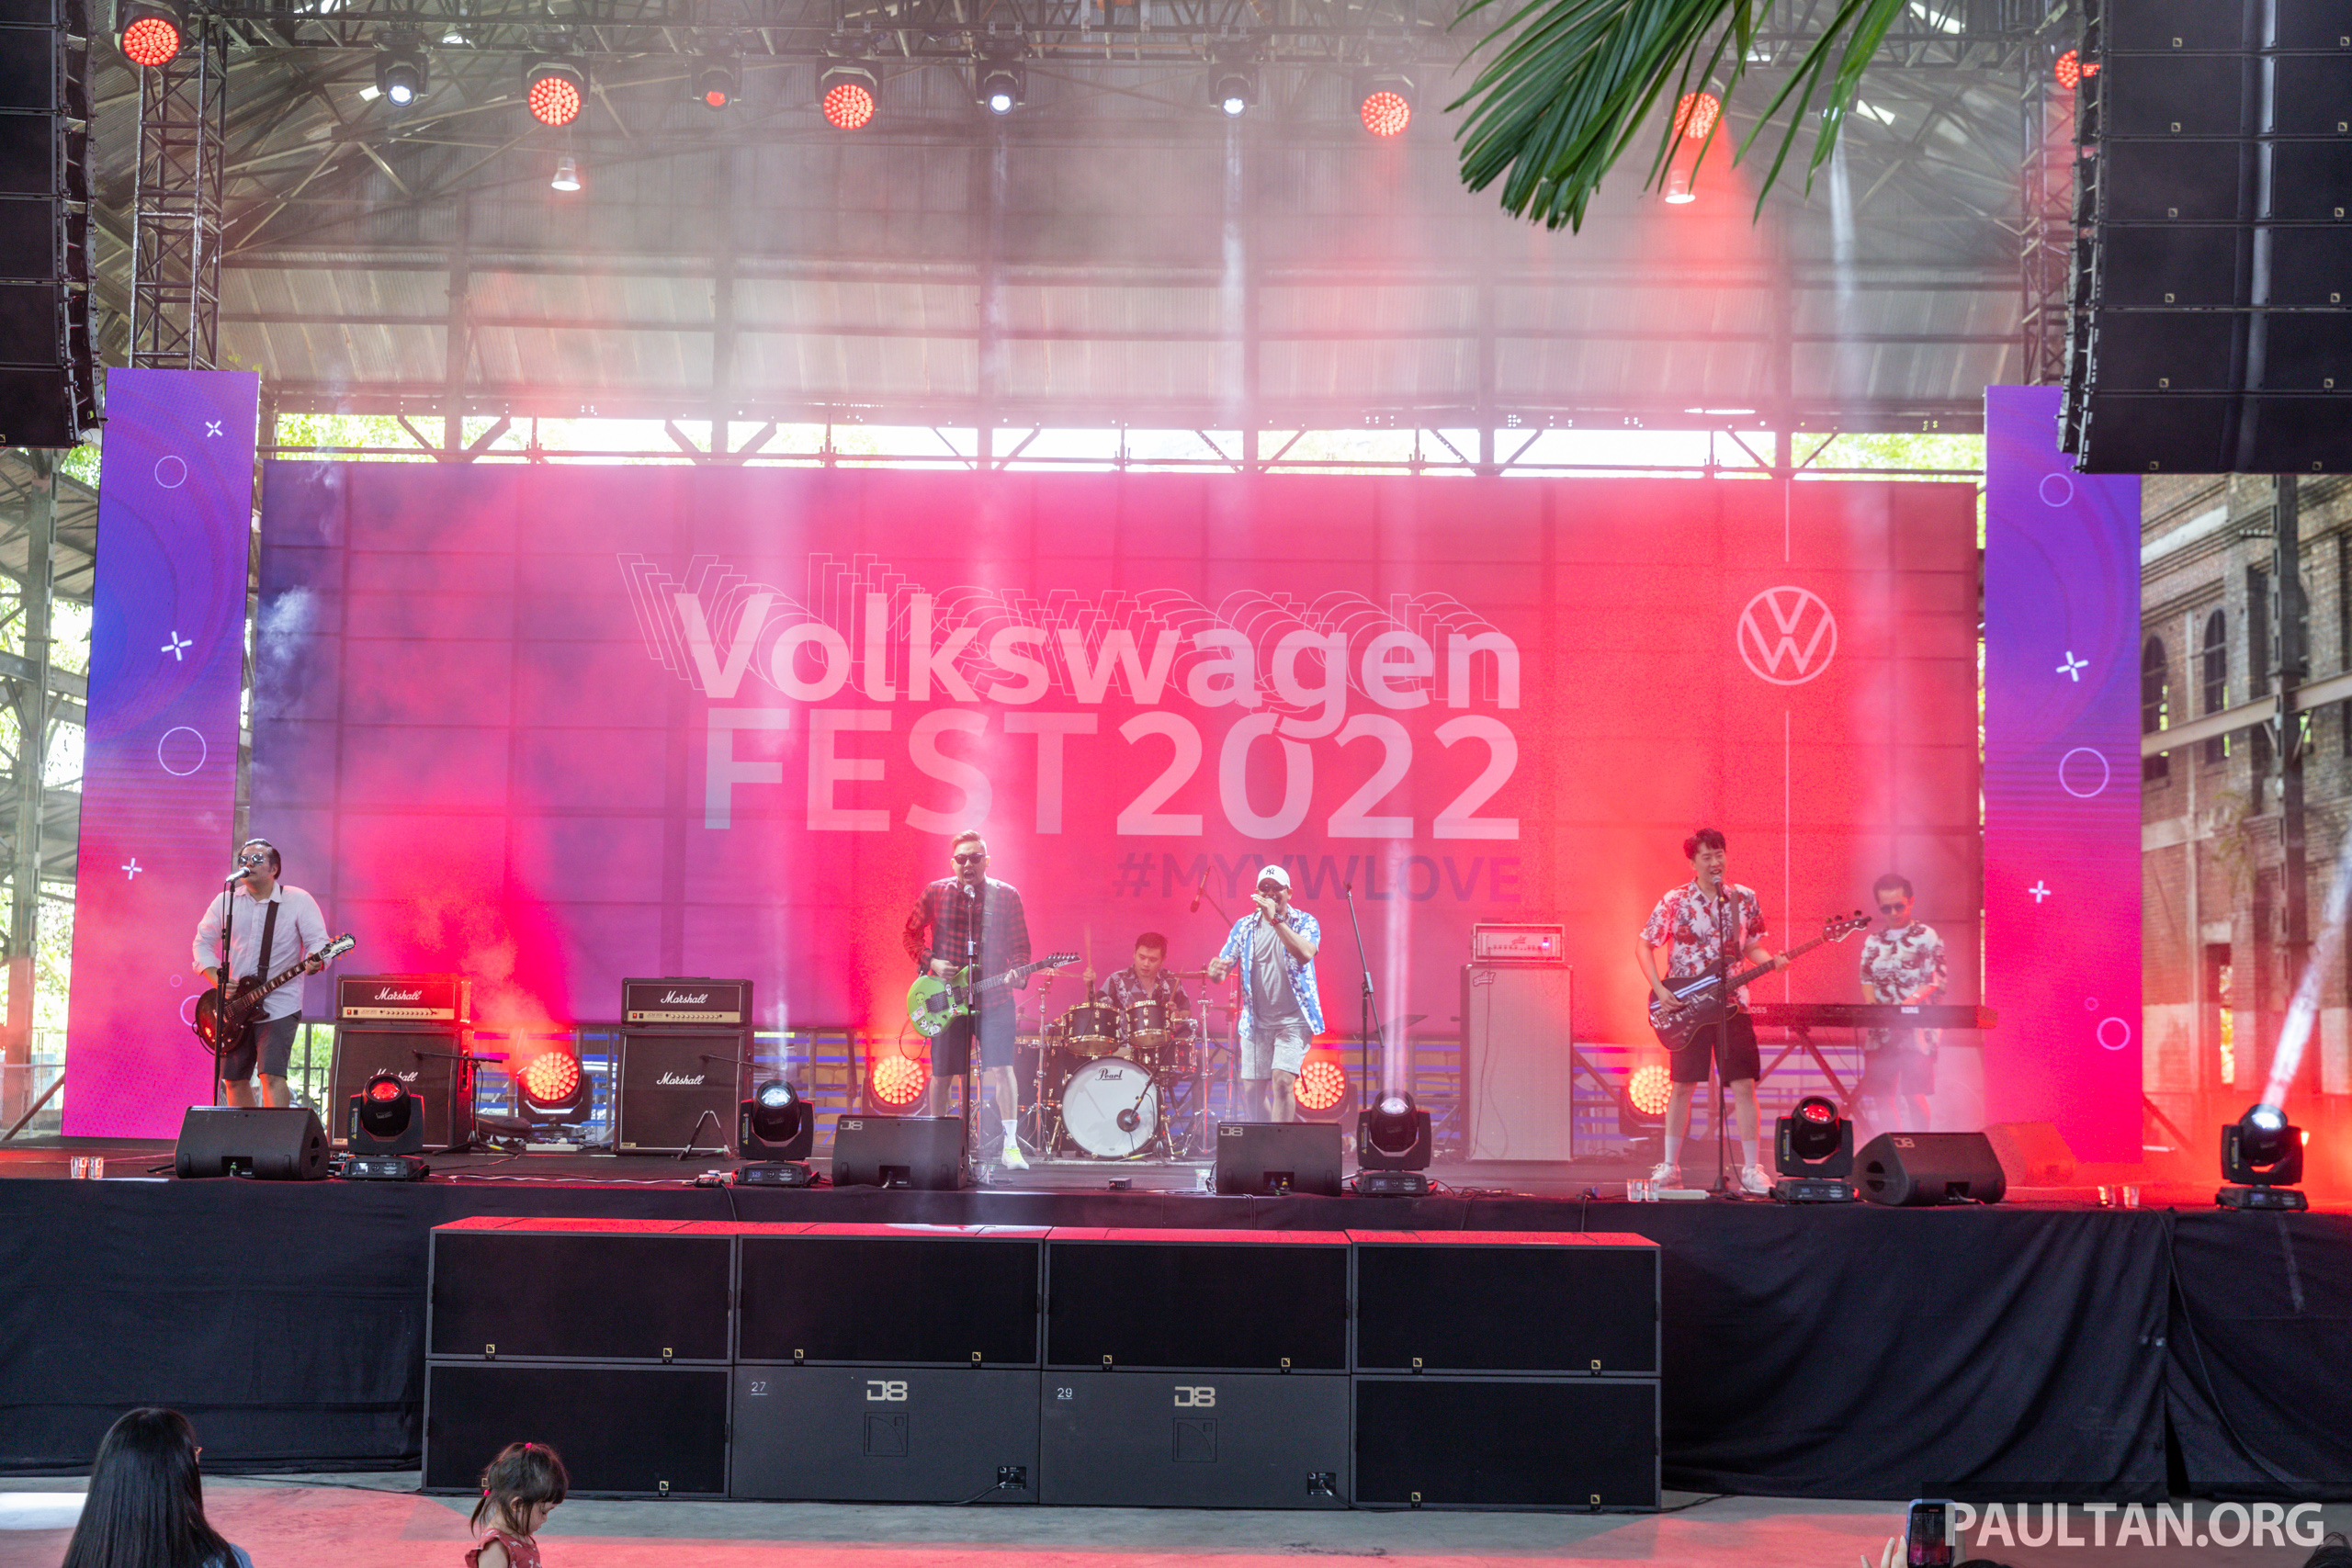 Volkswagen Fest 2022 this weekend at Sentul Depot, KL see the ID.4 EV